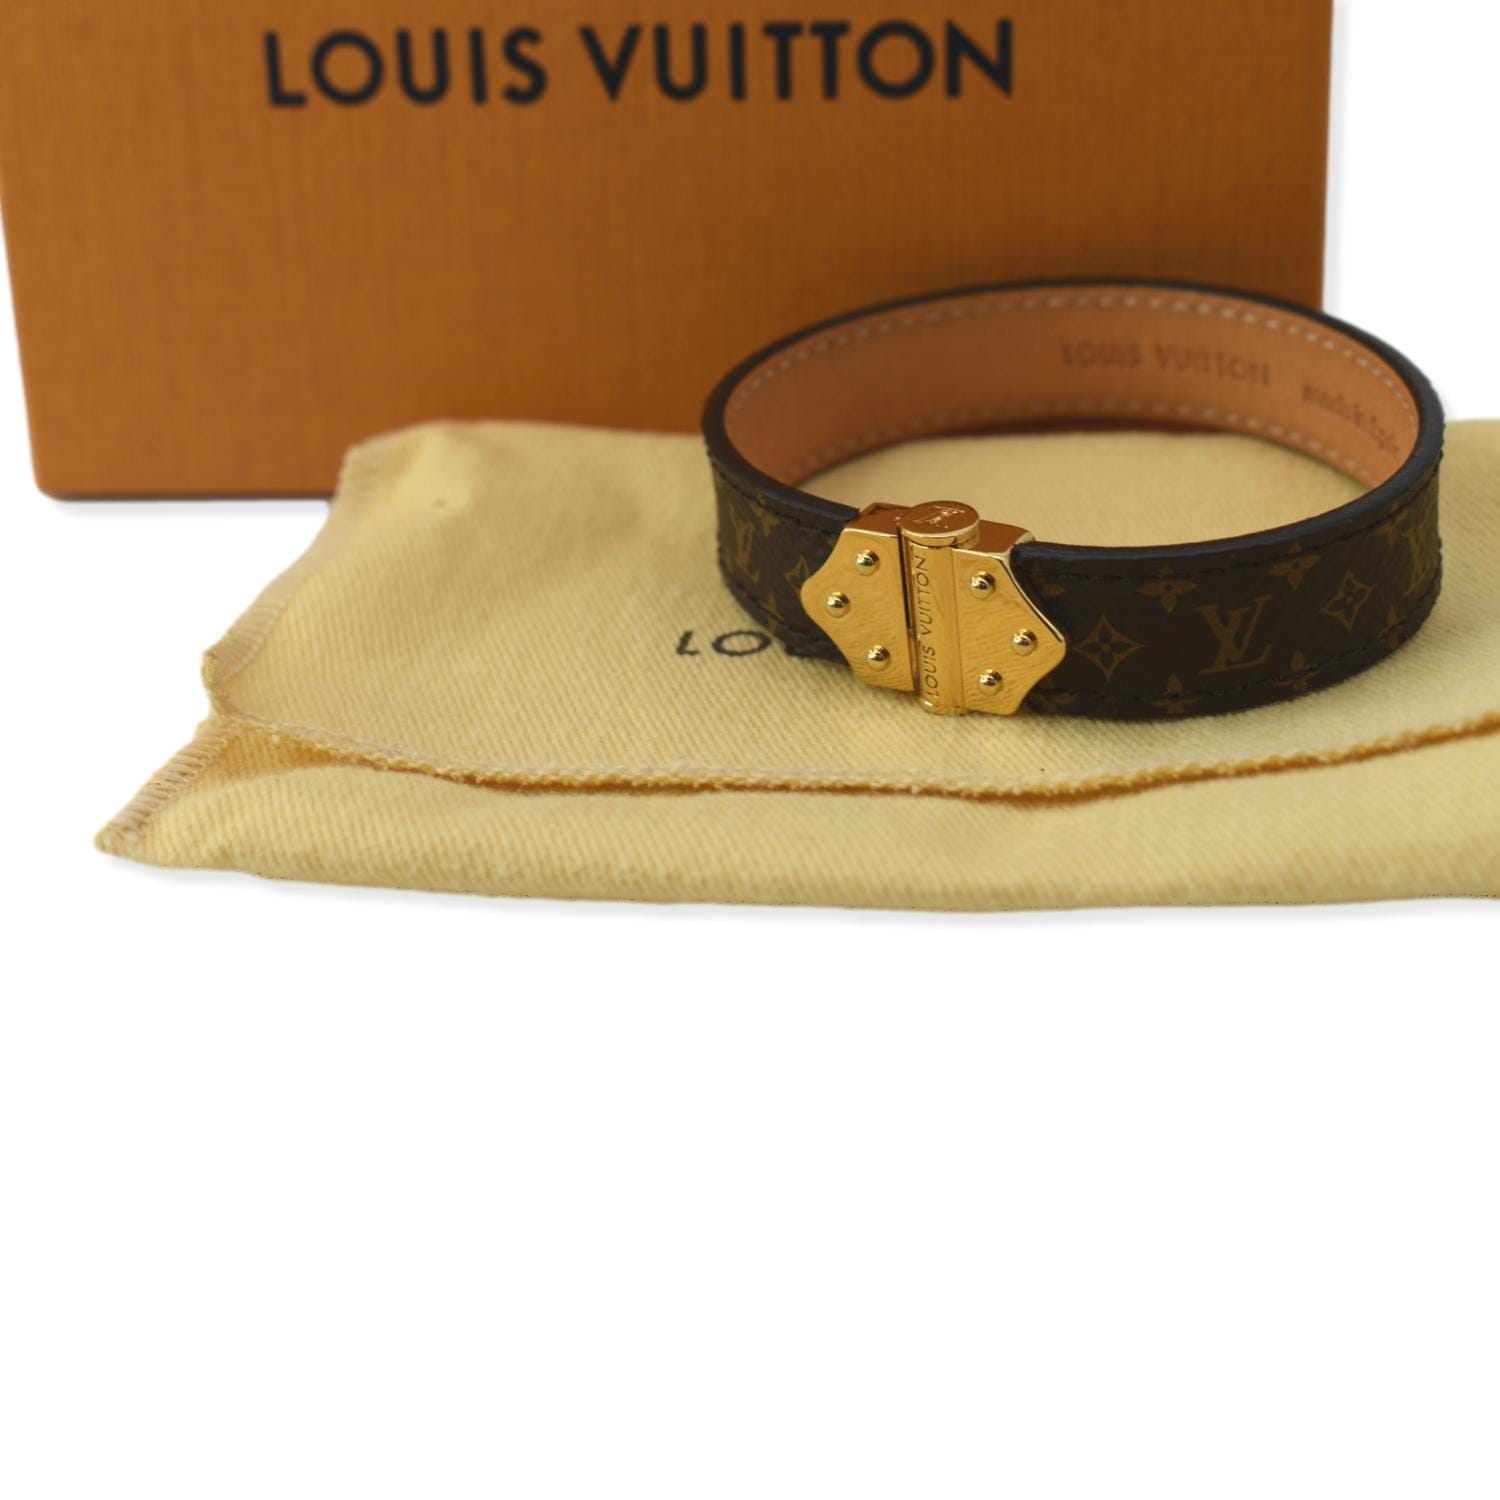 Louis Vuitton Monogram Fasten Your LV Bracelet, Brown, 17